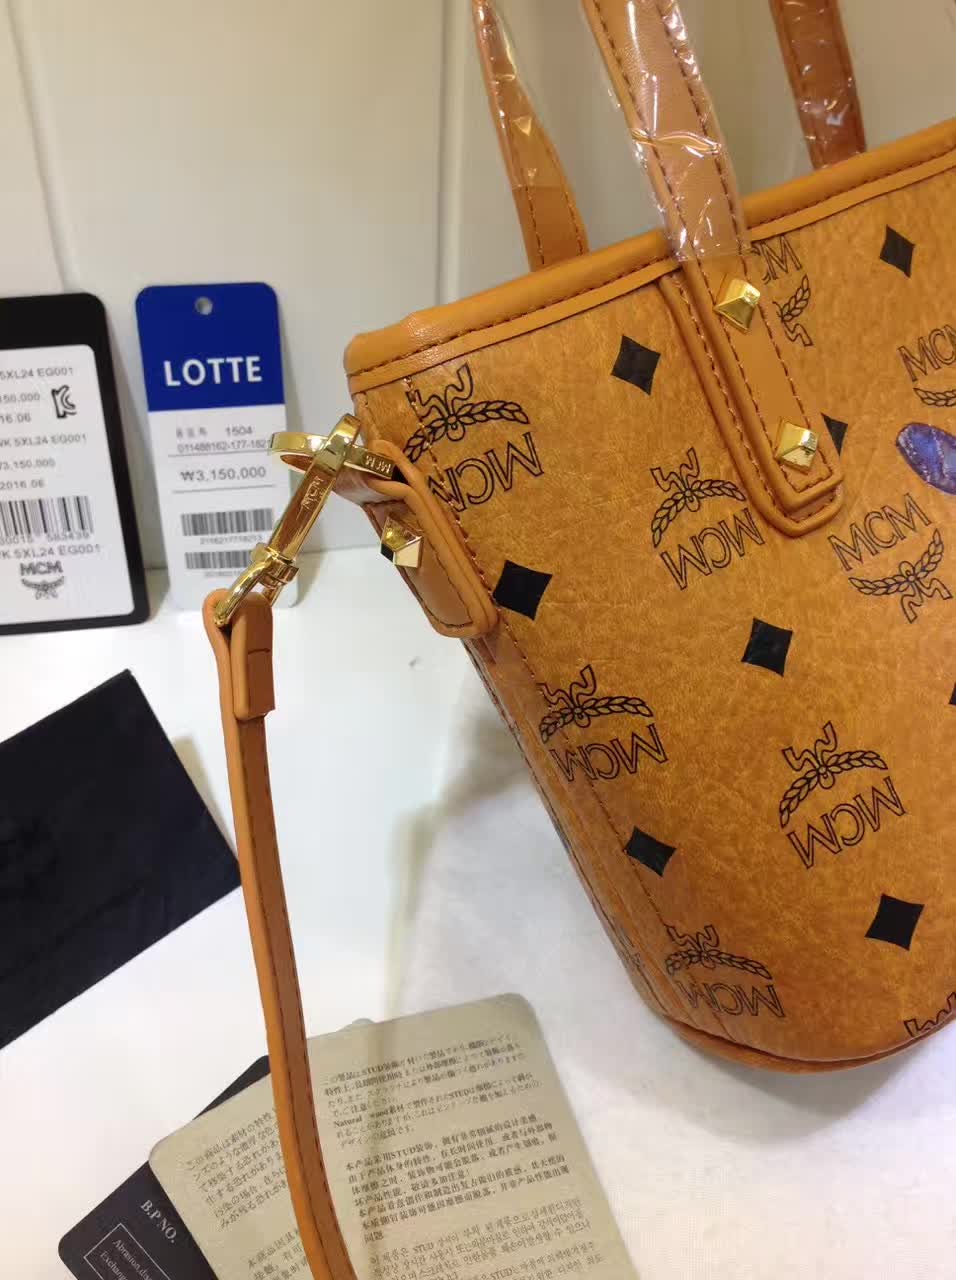 MCM包包批发 2017专柜新款 兔子购物袋造型mini斜挎包 土黄